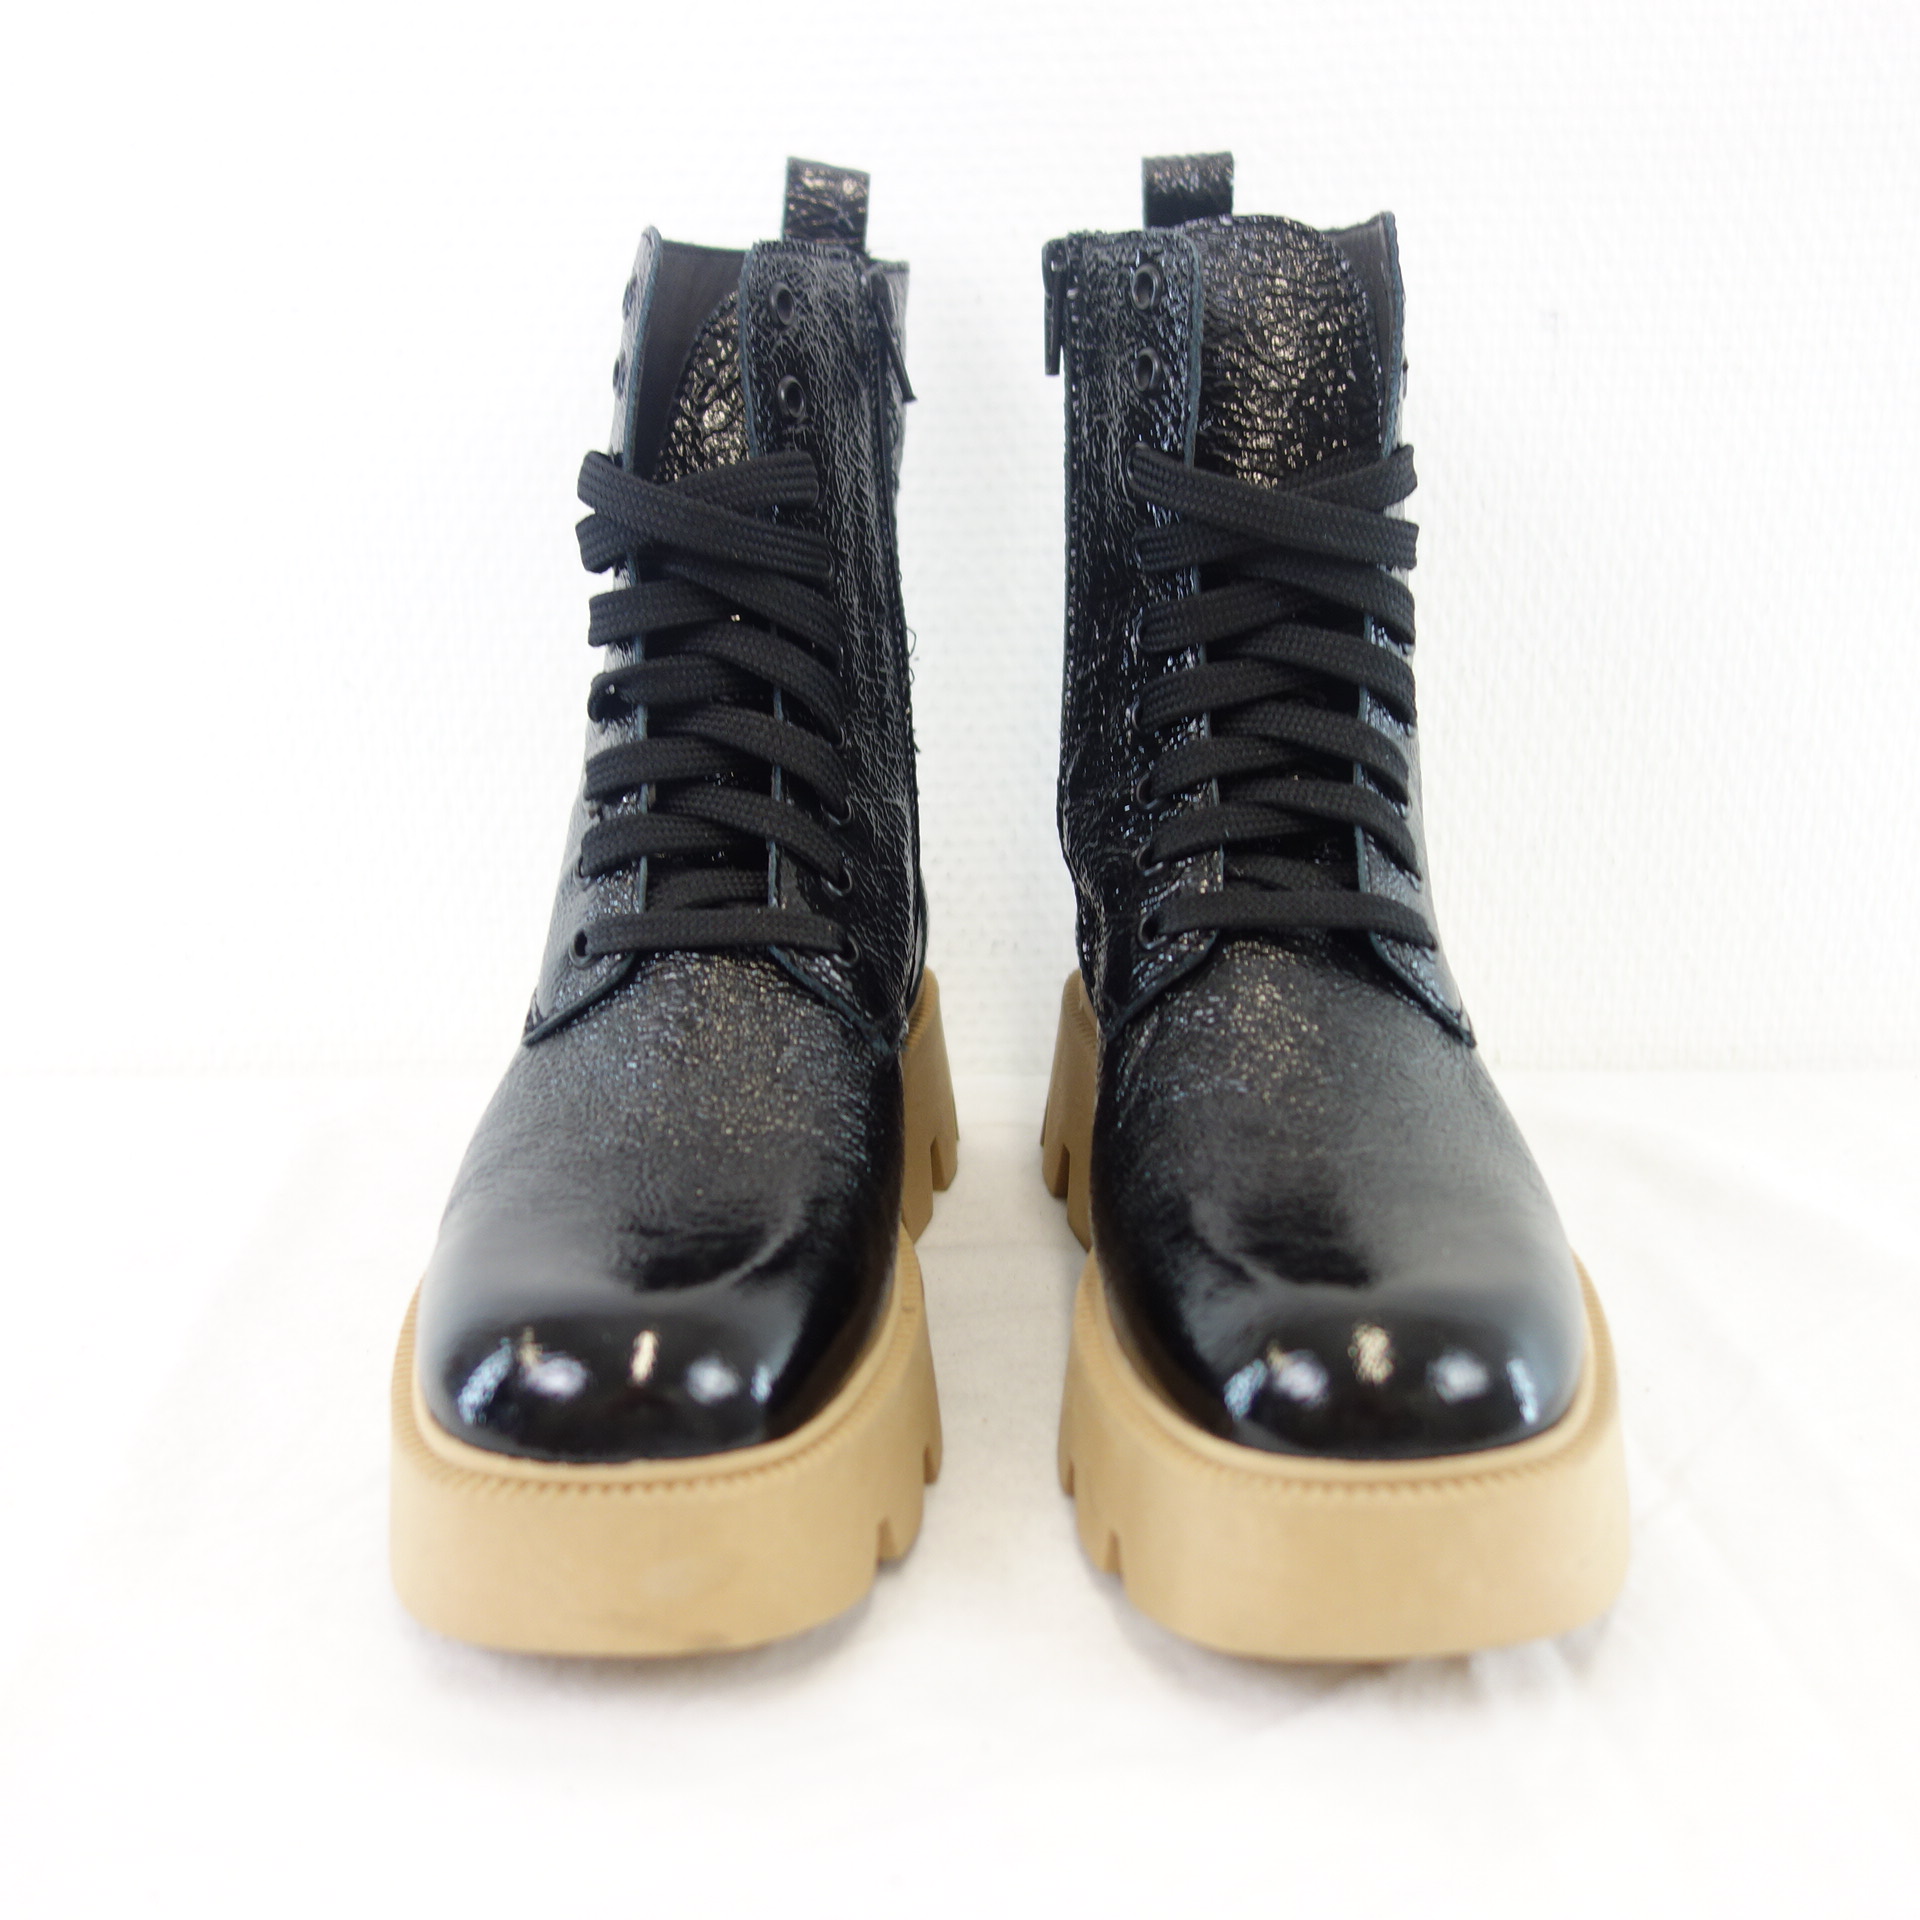 BUKELA Damen Schuhe Stiefeletten Combat Boots Stiefel Leder Schwarz Gr 37